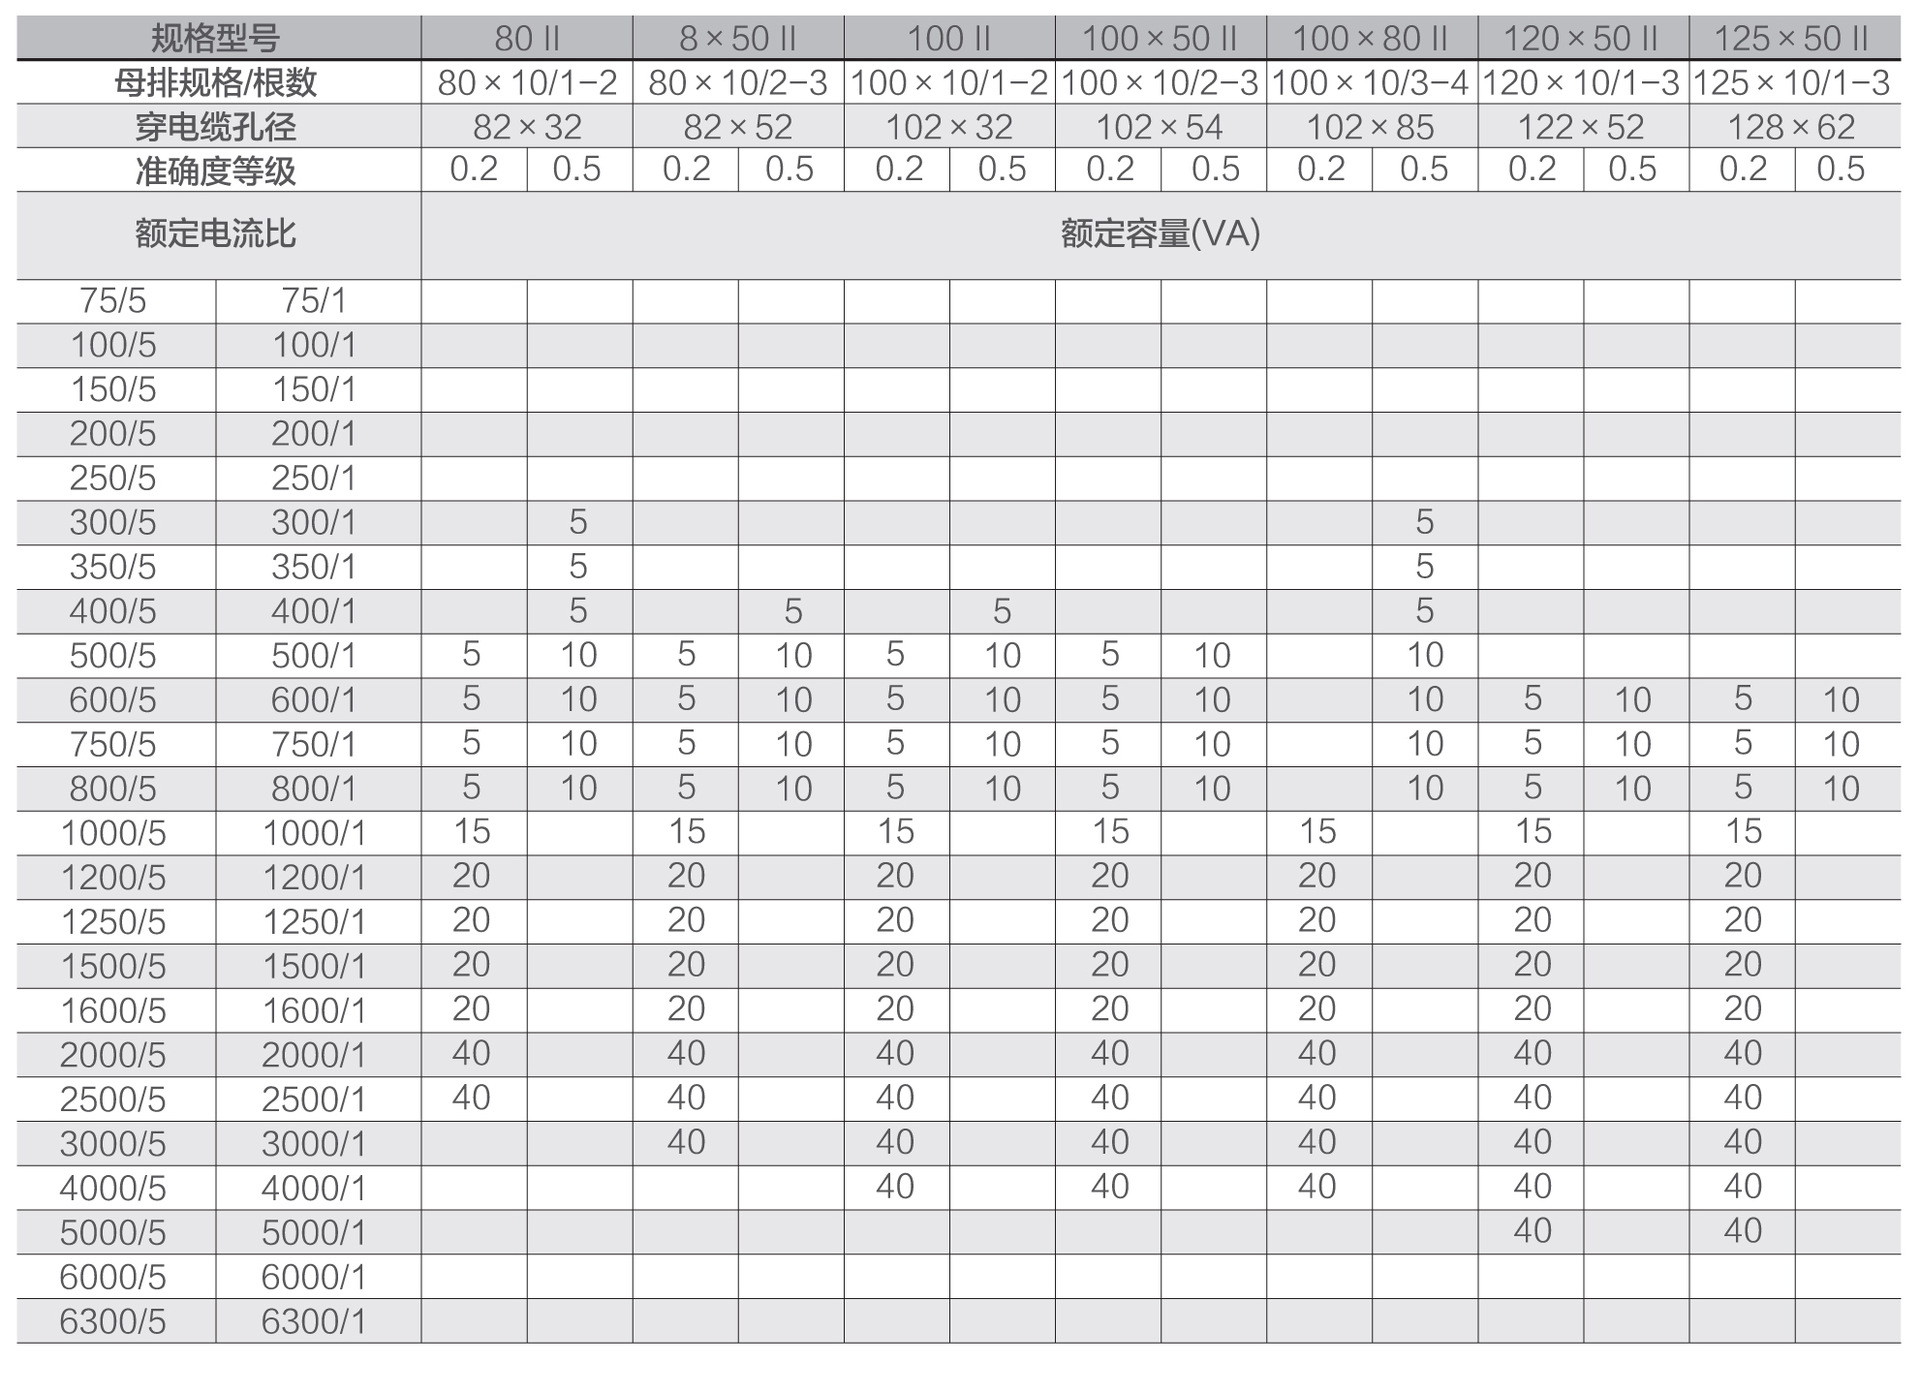 SHI-066-20I精度等级1级电流互感器江苏斯菲尔厂家直销 电流互感器,江苏斯菲尔厂家直销,SHI-066